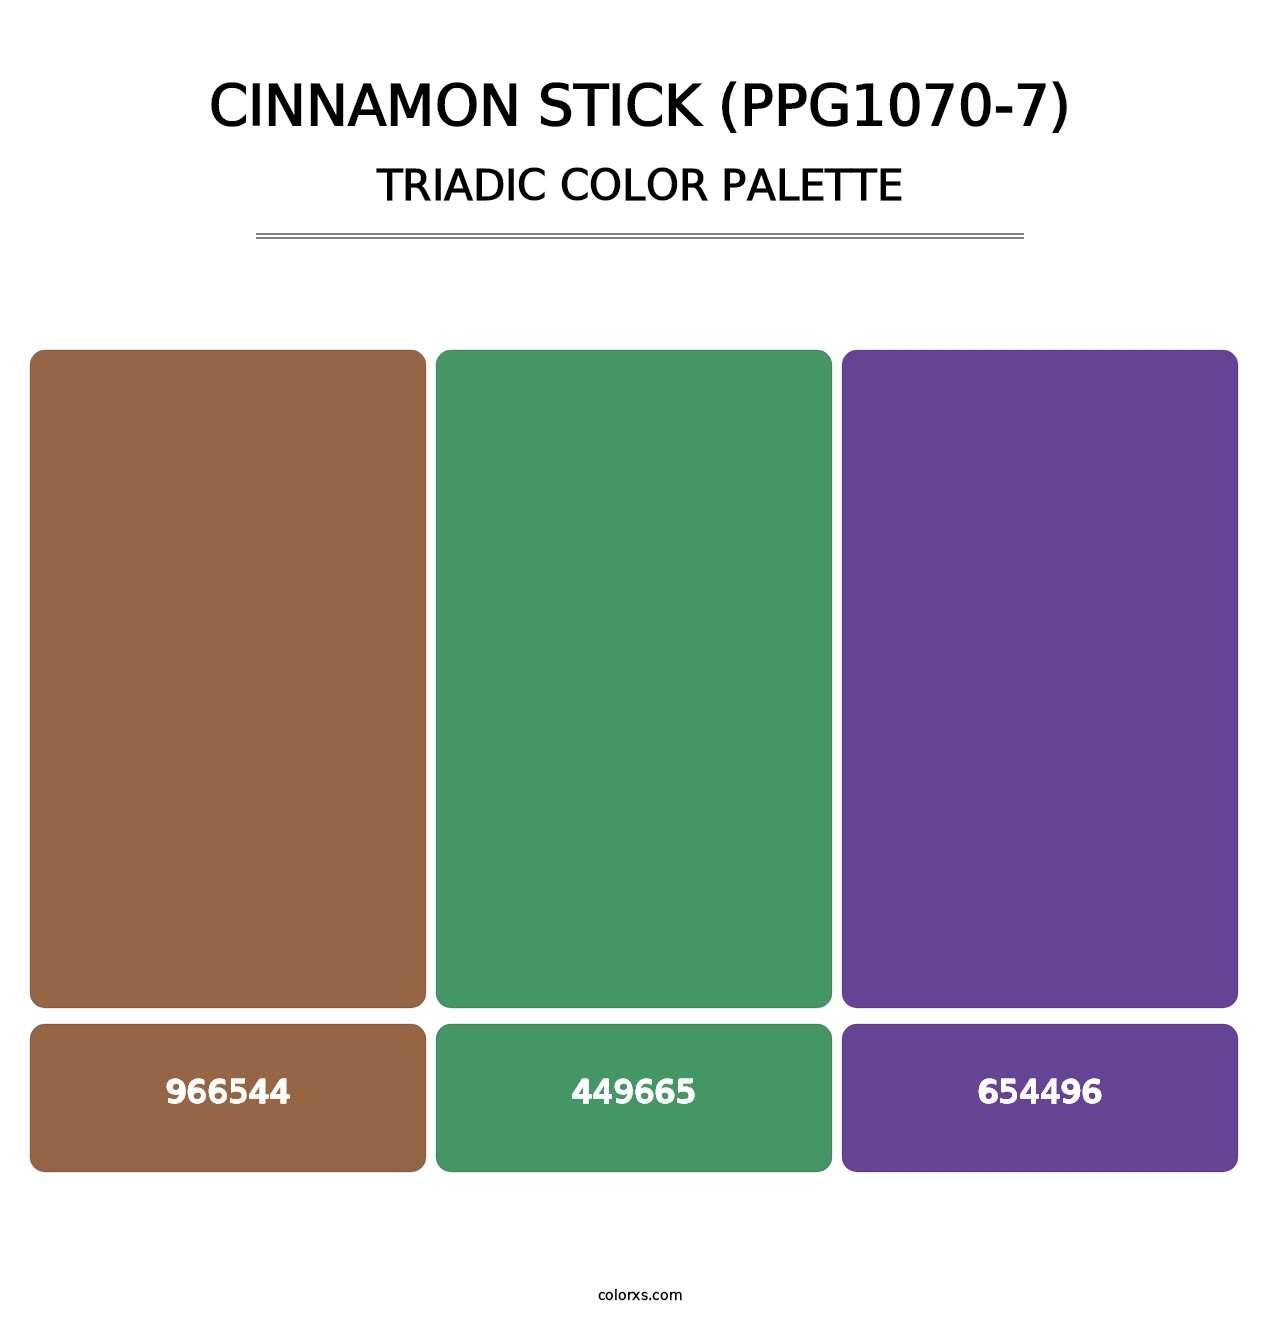 Cinnamon Stick (PPG1070-7) - Triadic Color Palette